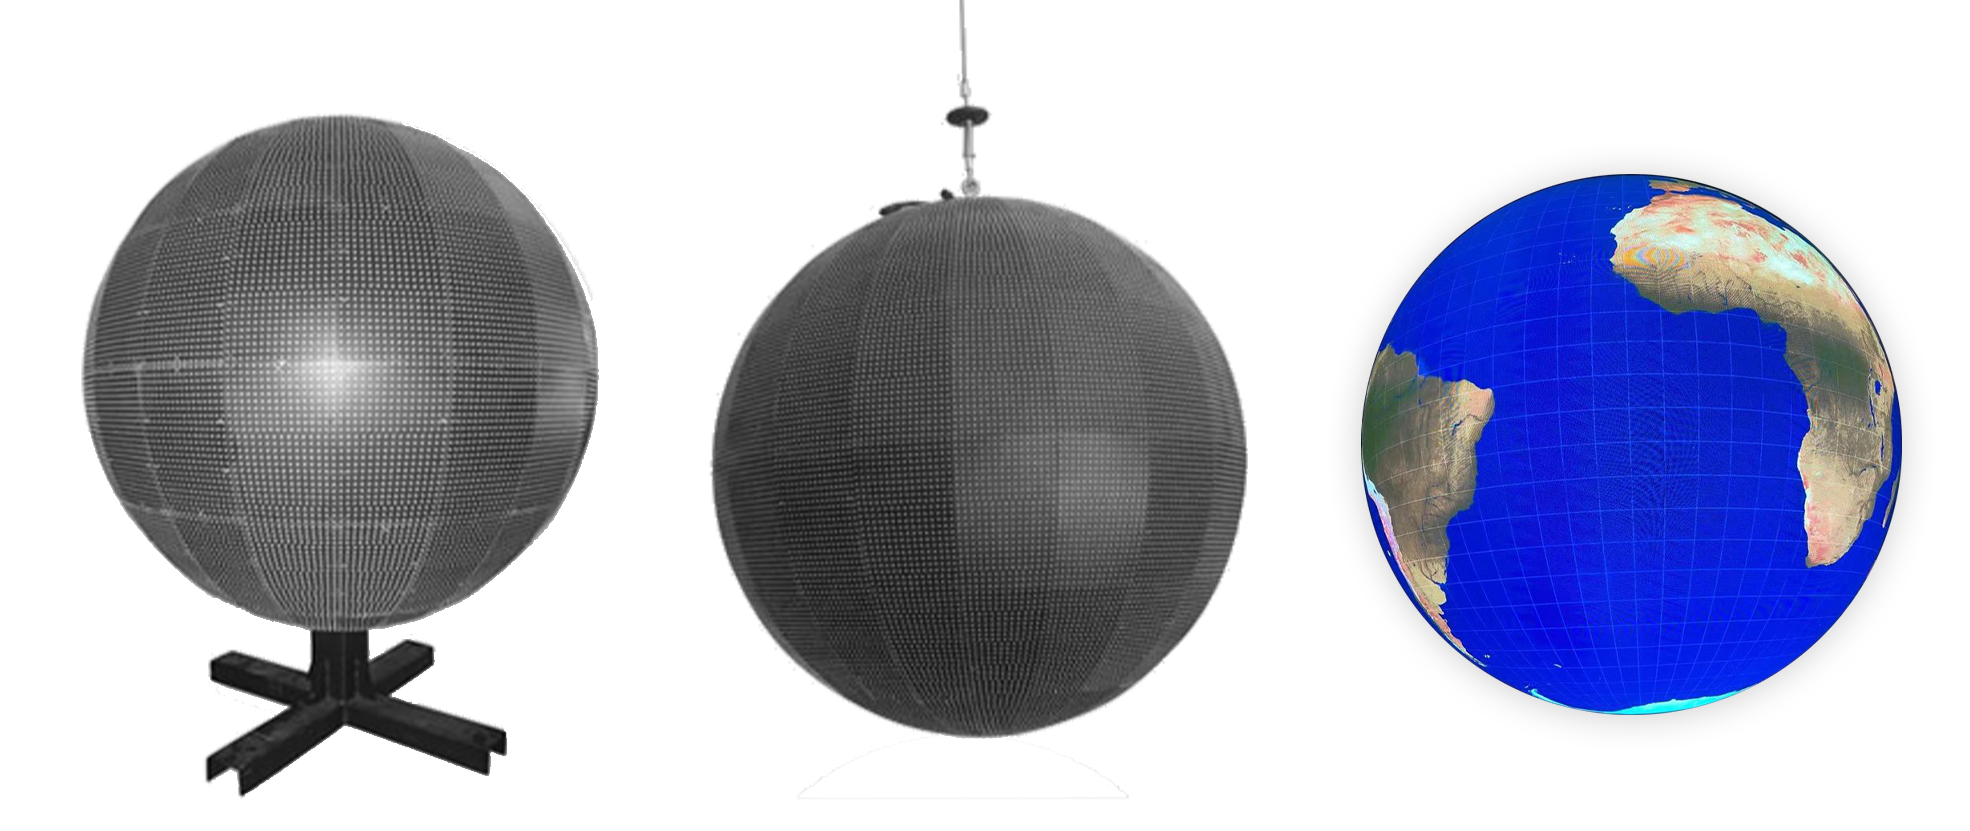 spherical LED display screen3